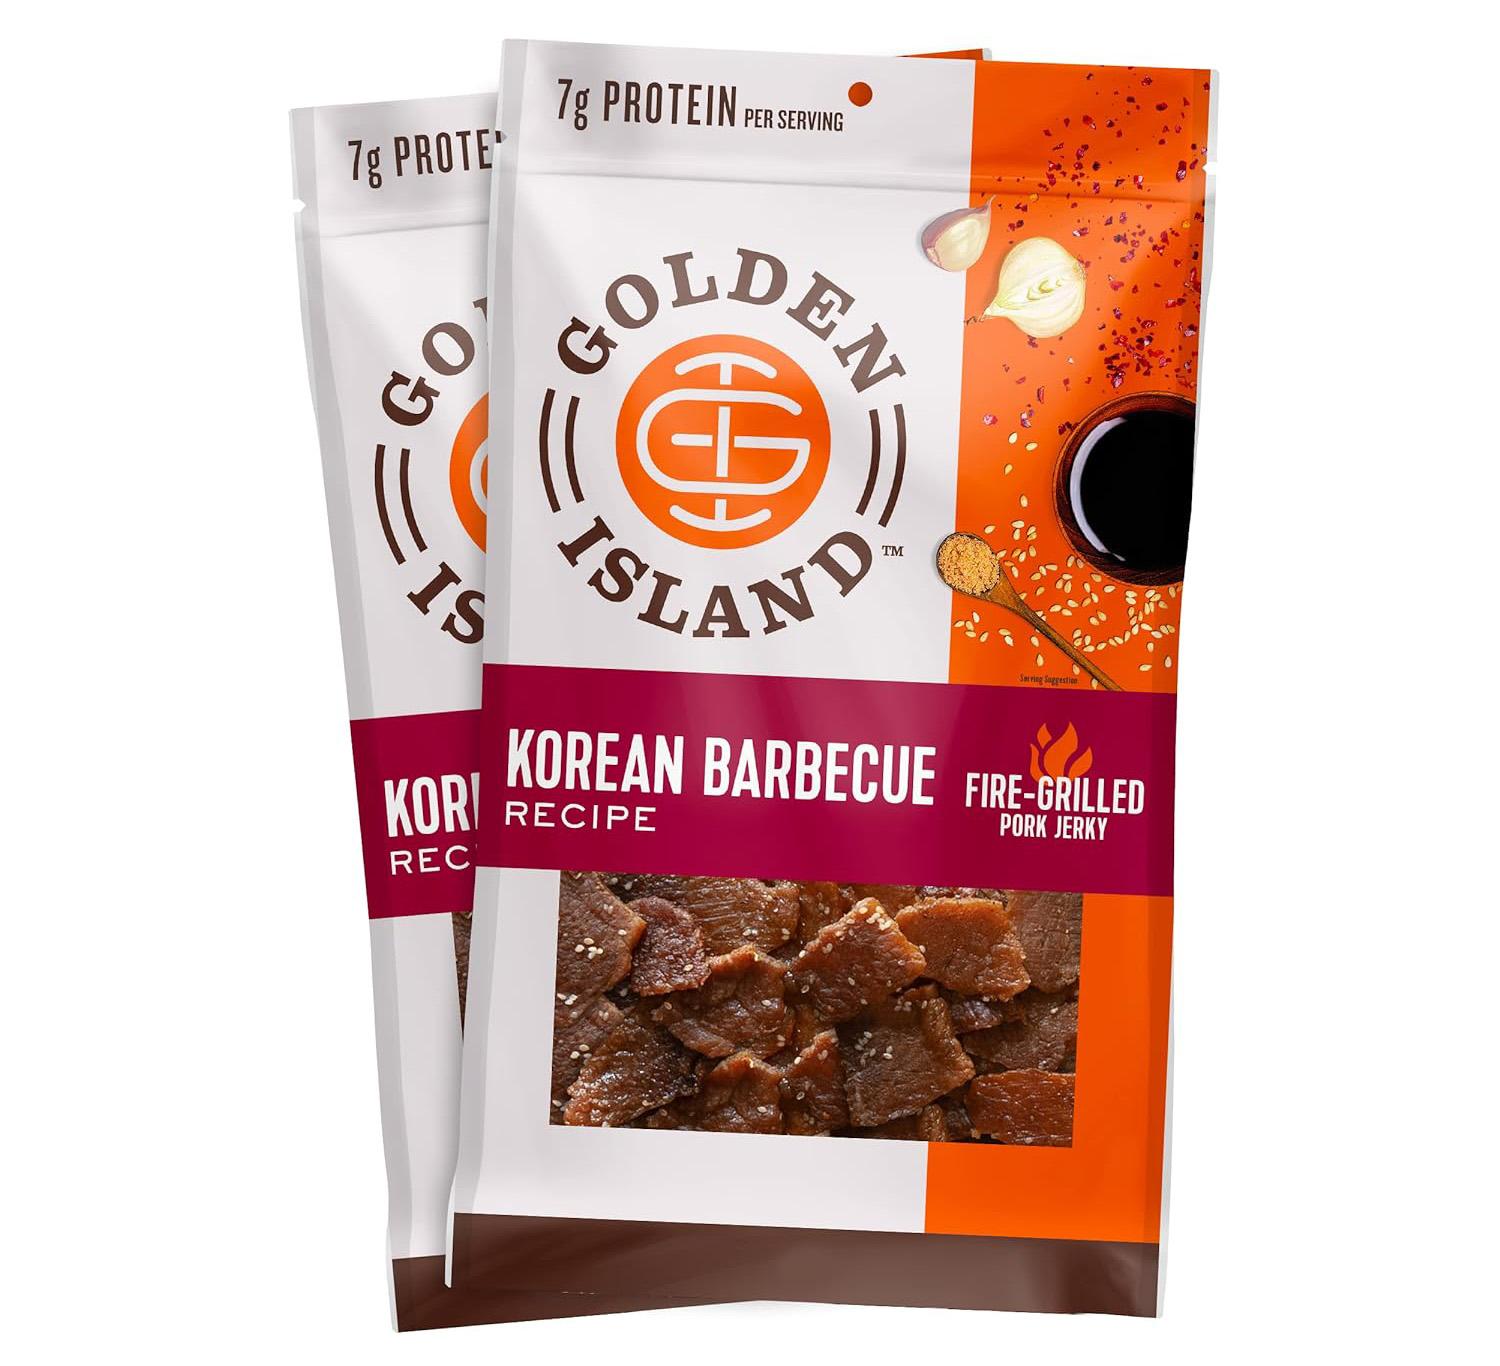 Golden Island Pork Jerky Korean Barbecue Protein Snack 2 Pack for $17.04